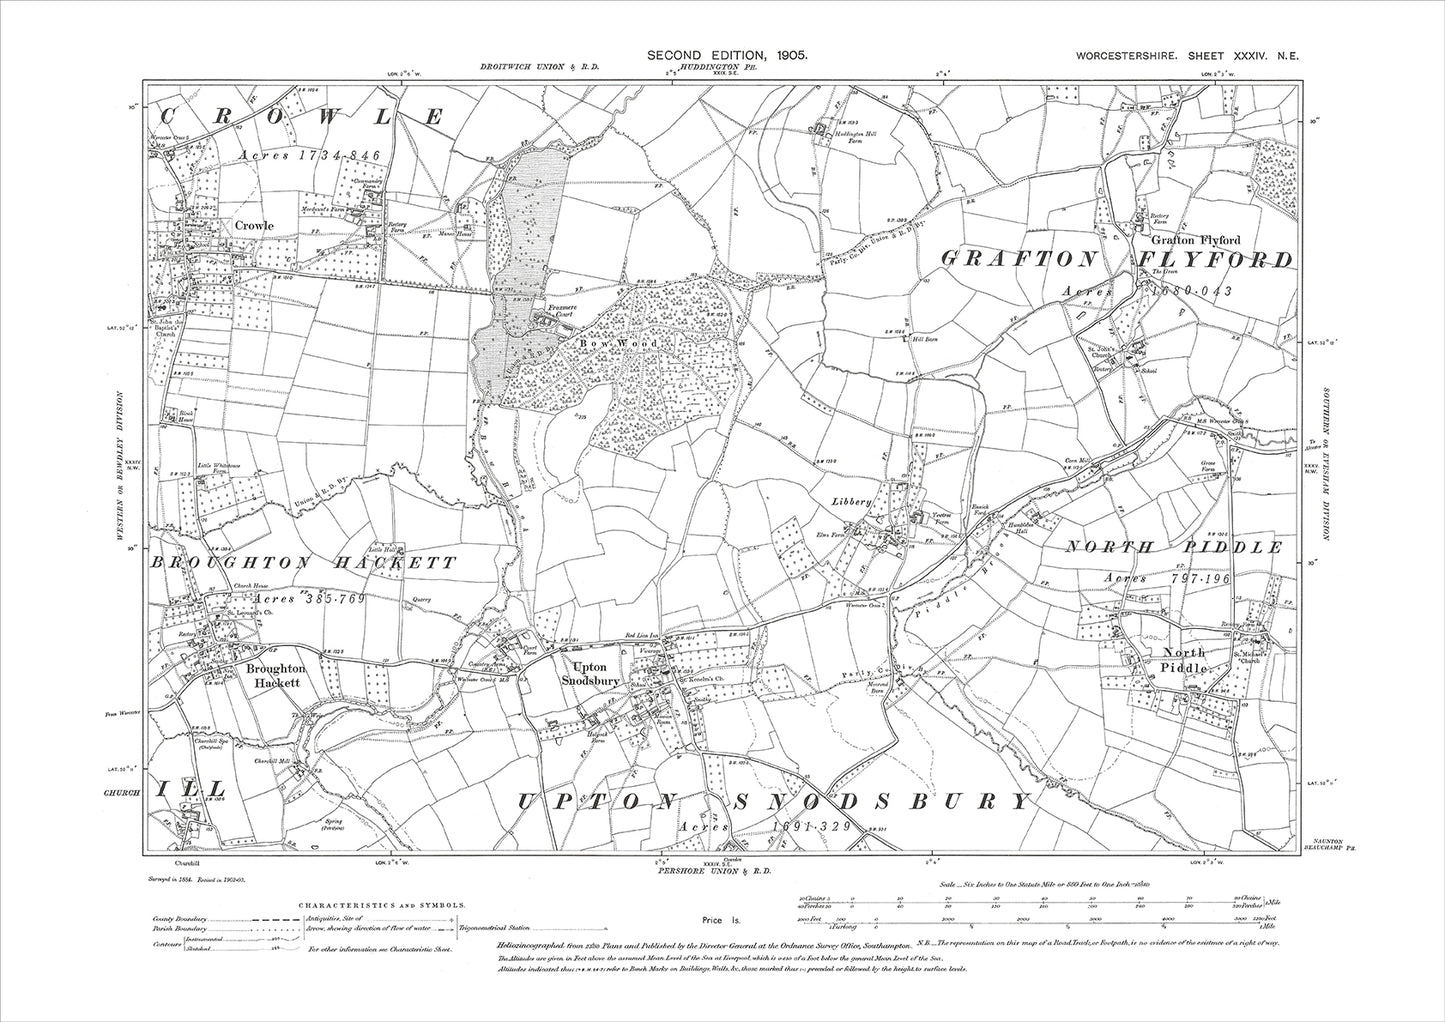 Crowle, Grafton Flyford, Broughton Hackett, old map Worcestershire 1905: 34NE